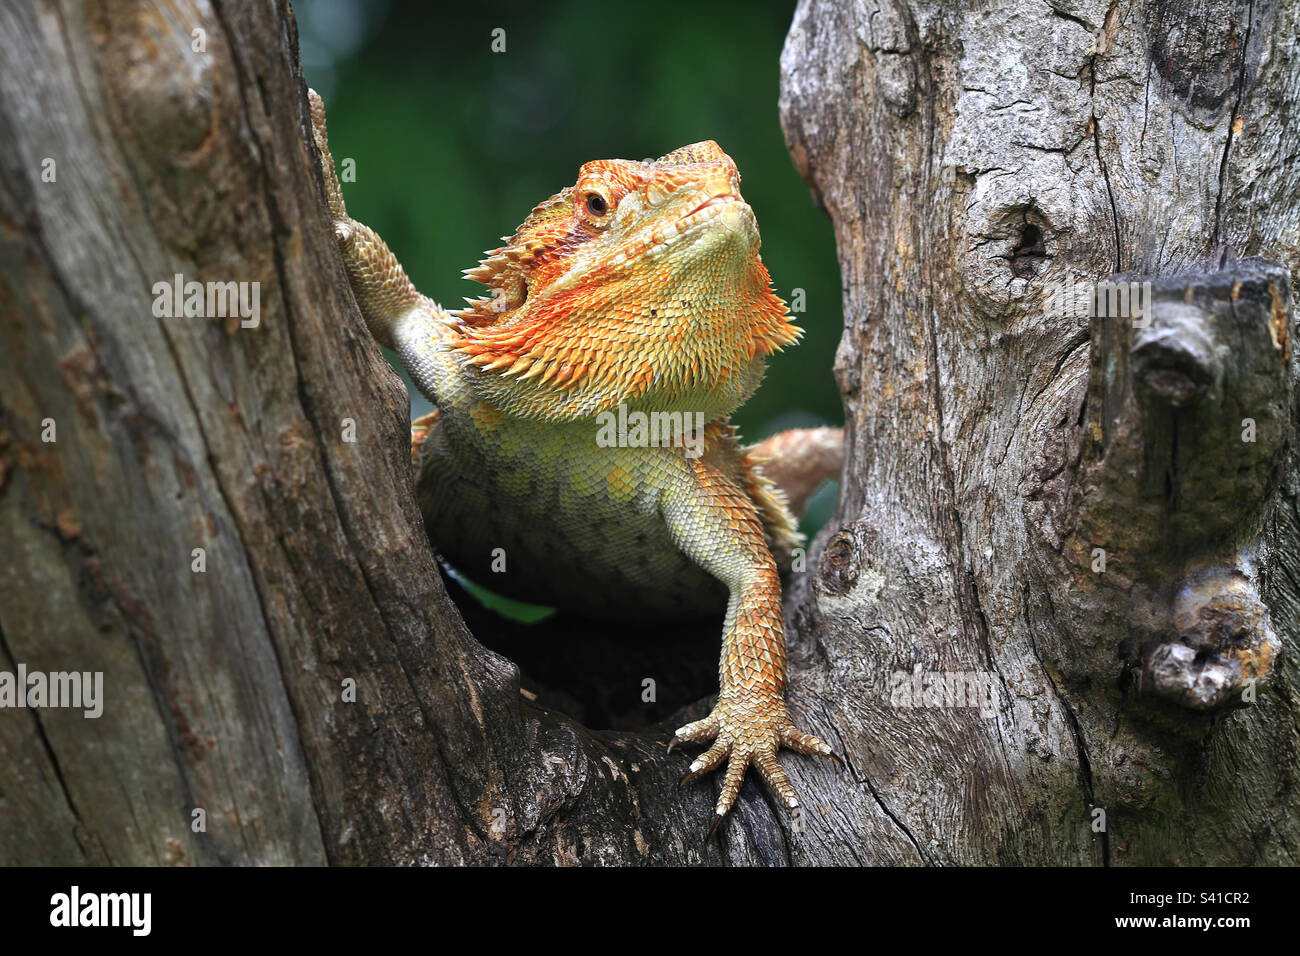 The Beautiful CloseUP Pogona Reptile on a Tree Stock Photo